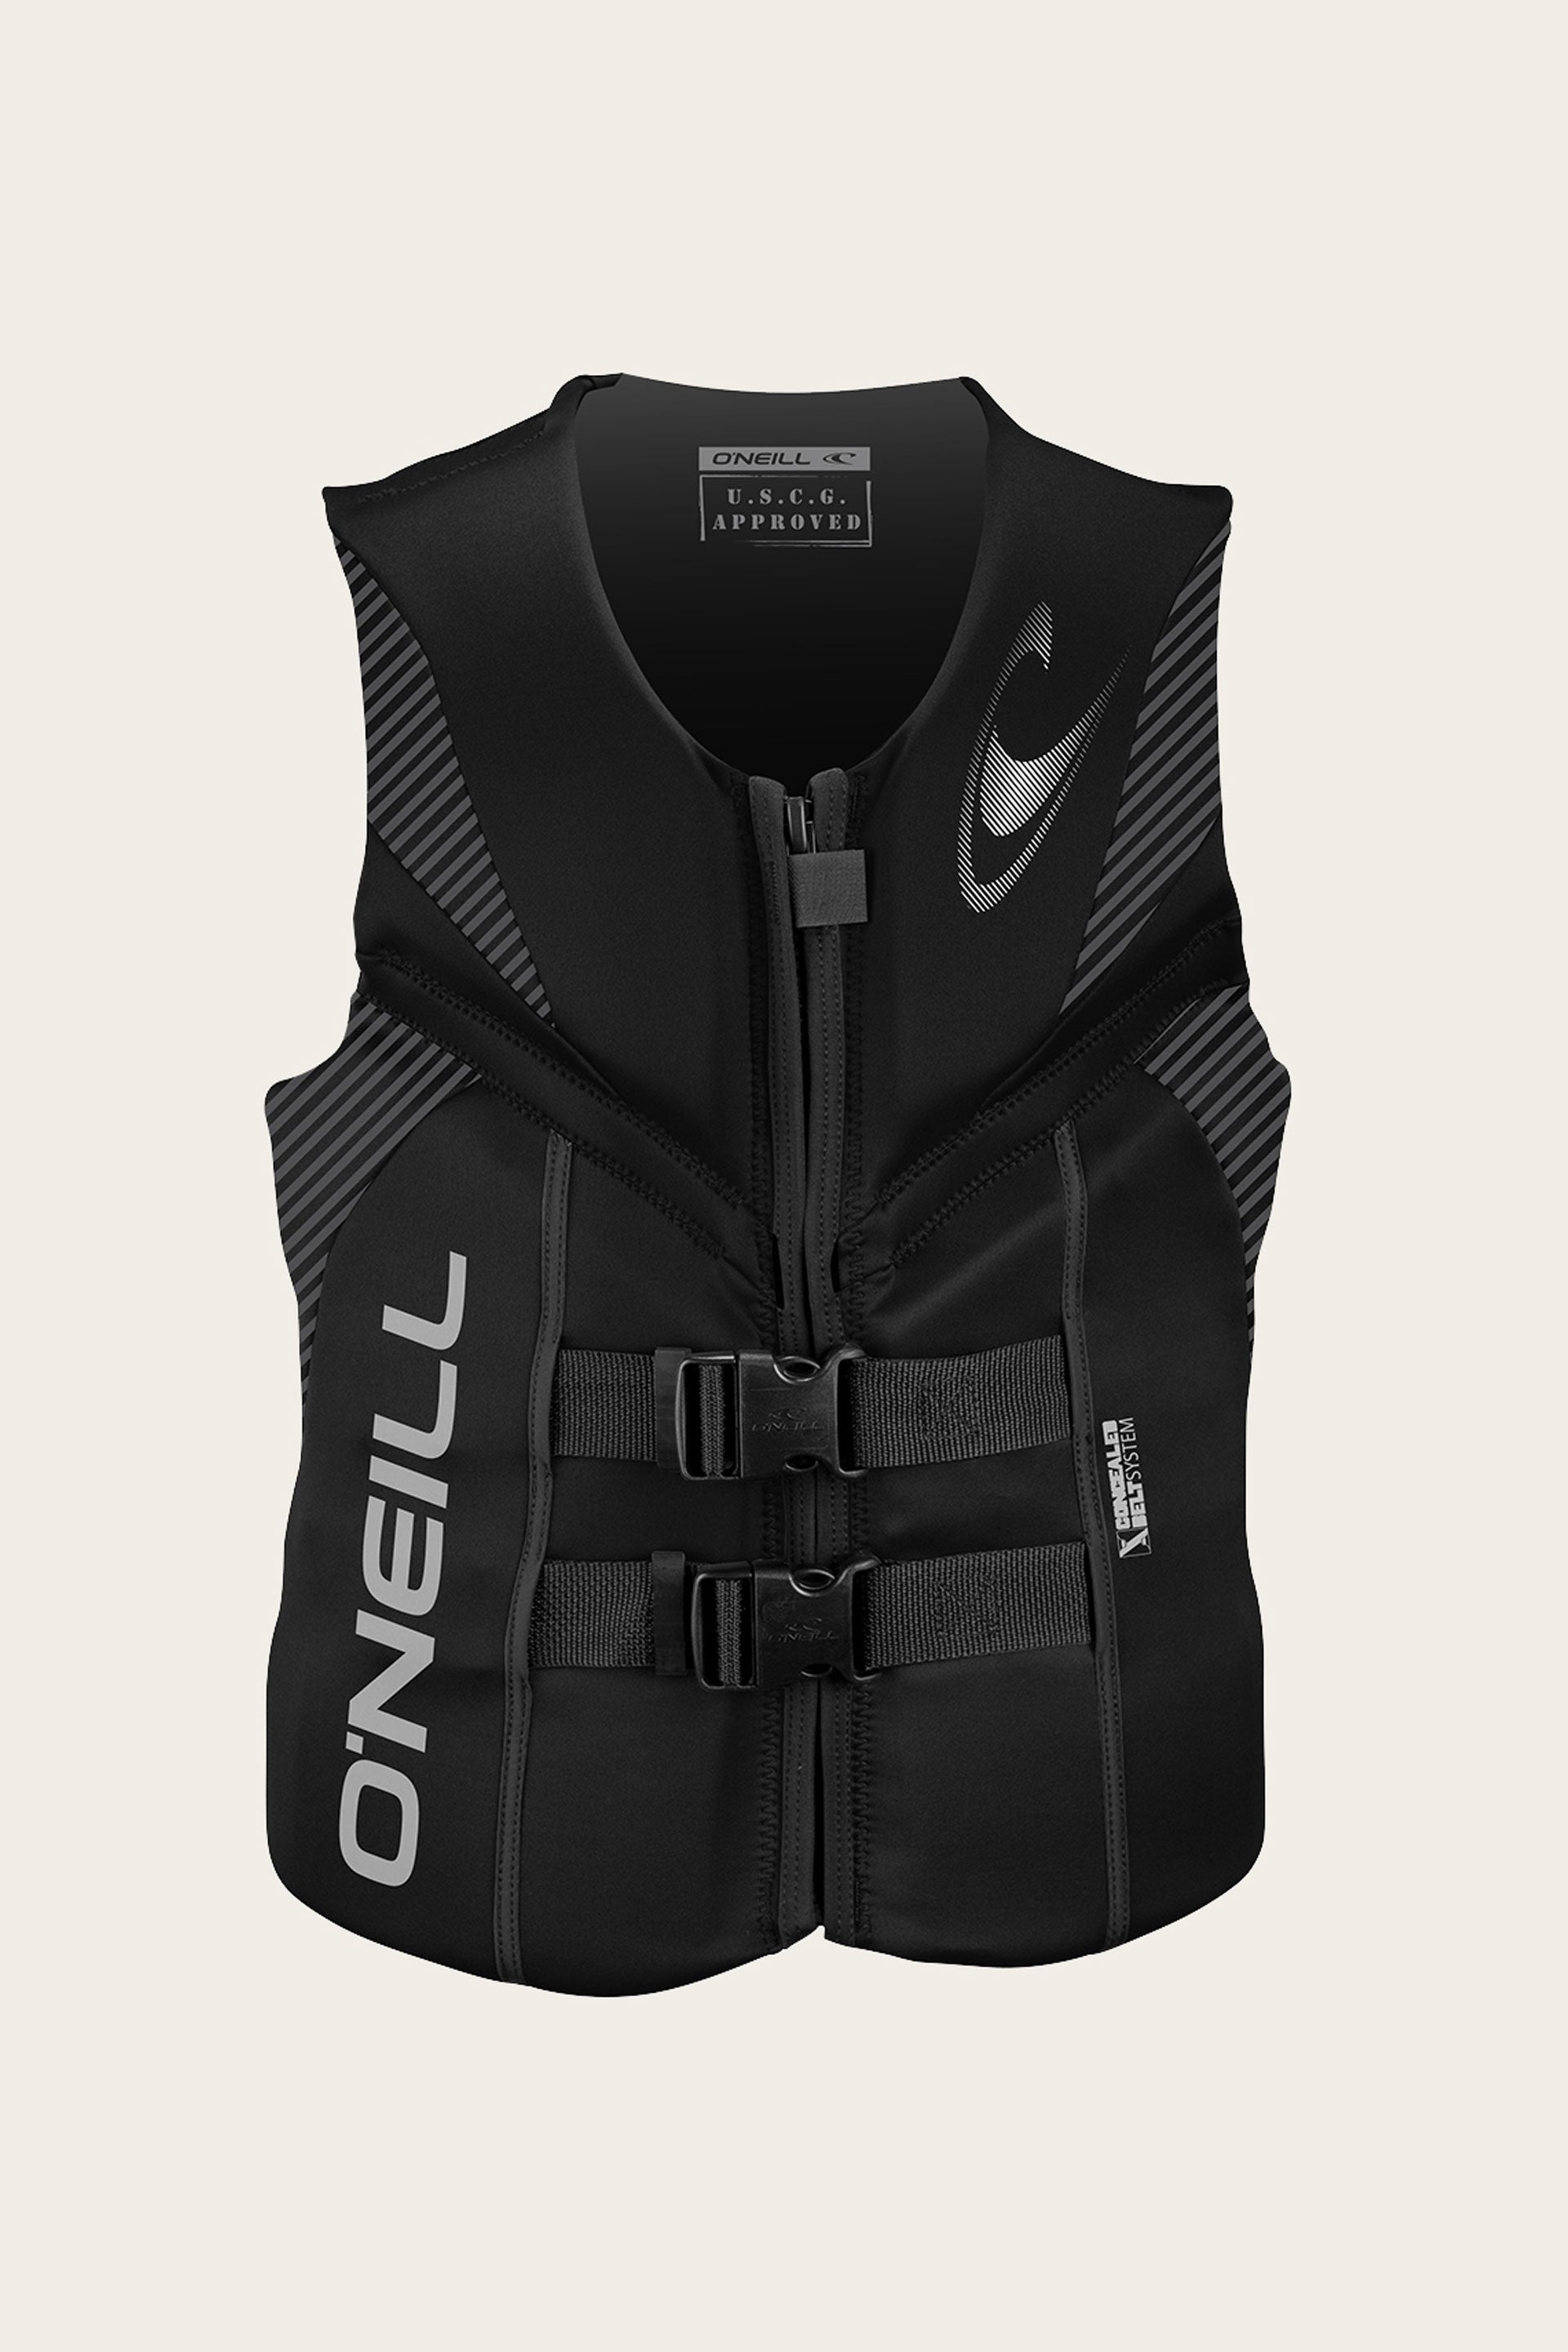 O'neill Men's Reactor Uscg Vest, Black, XL